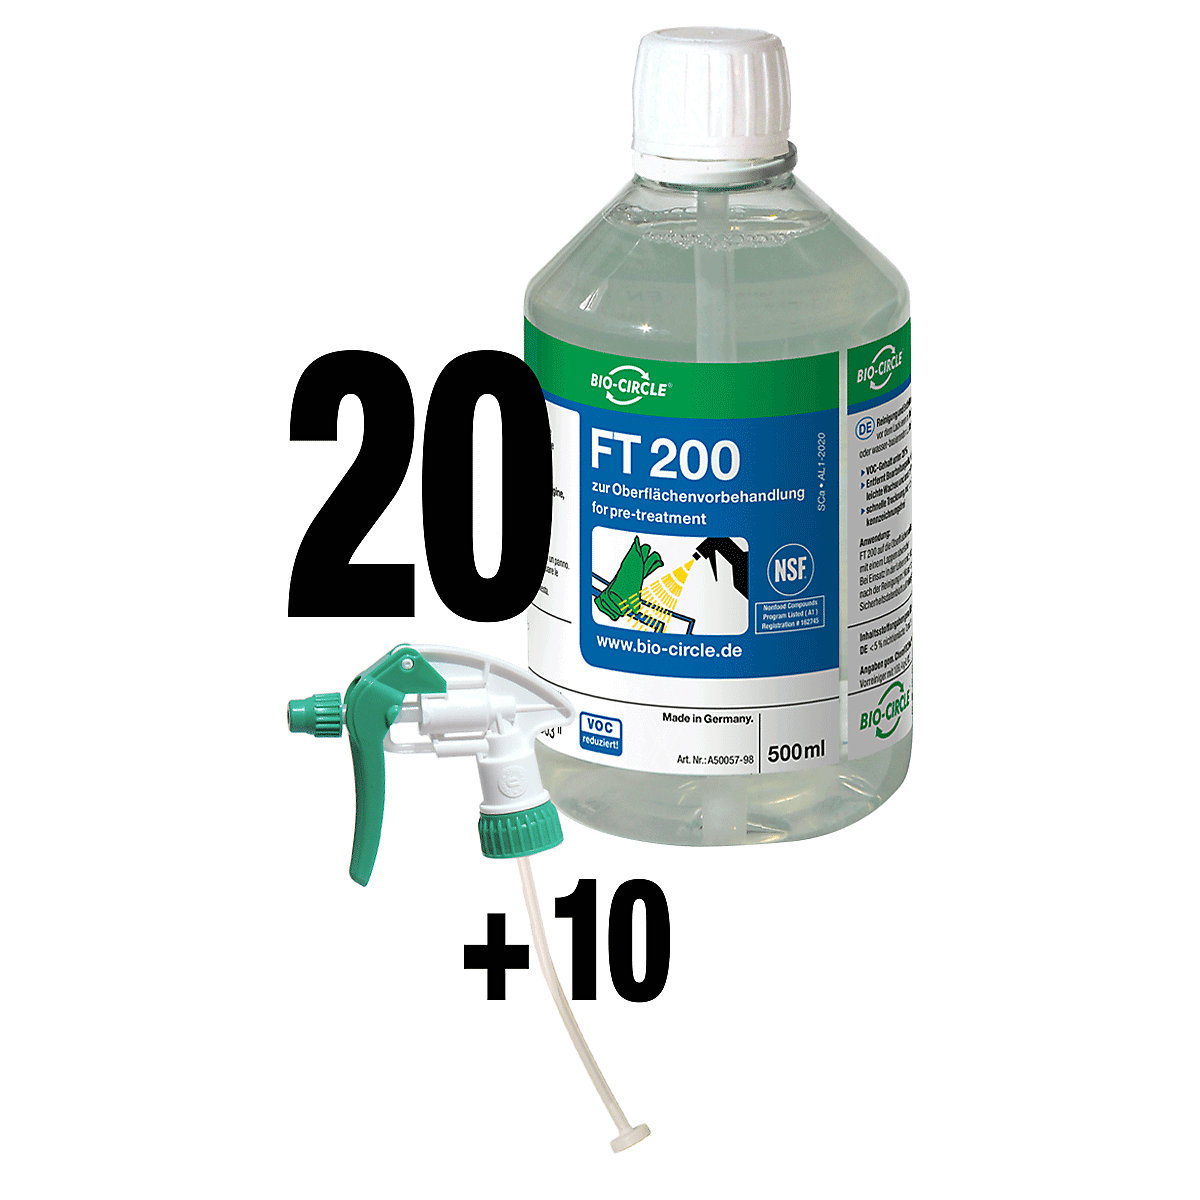 Detergente FT 200 - Bio-Circle